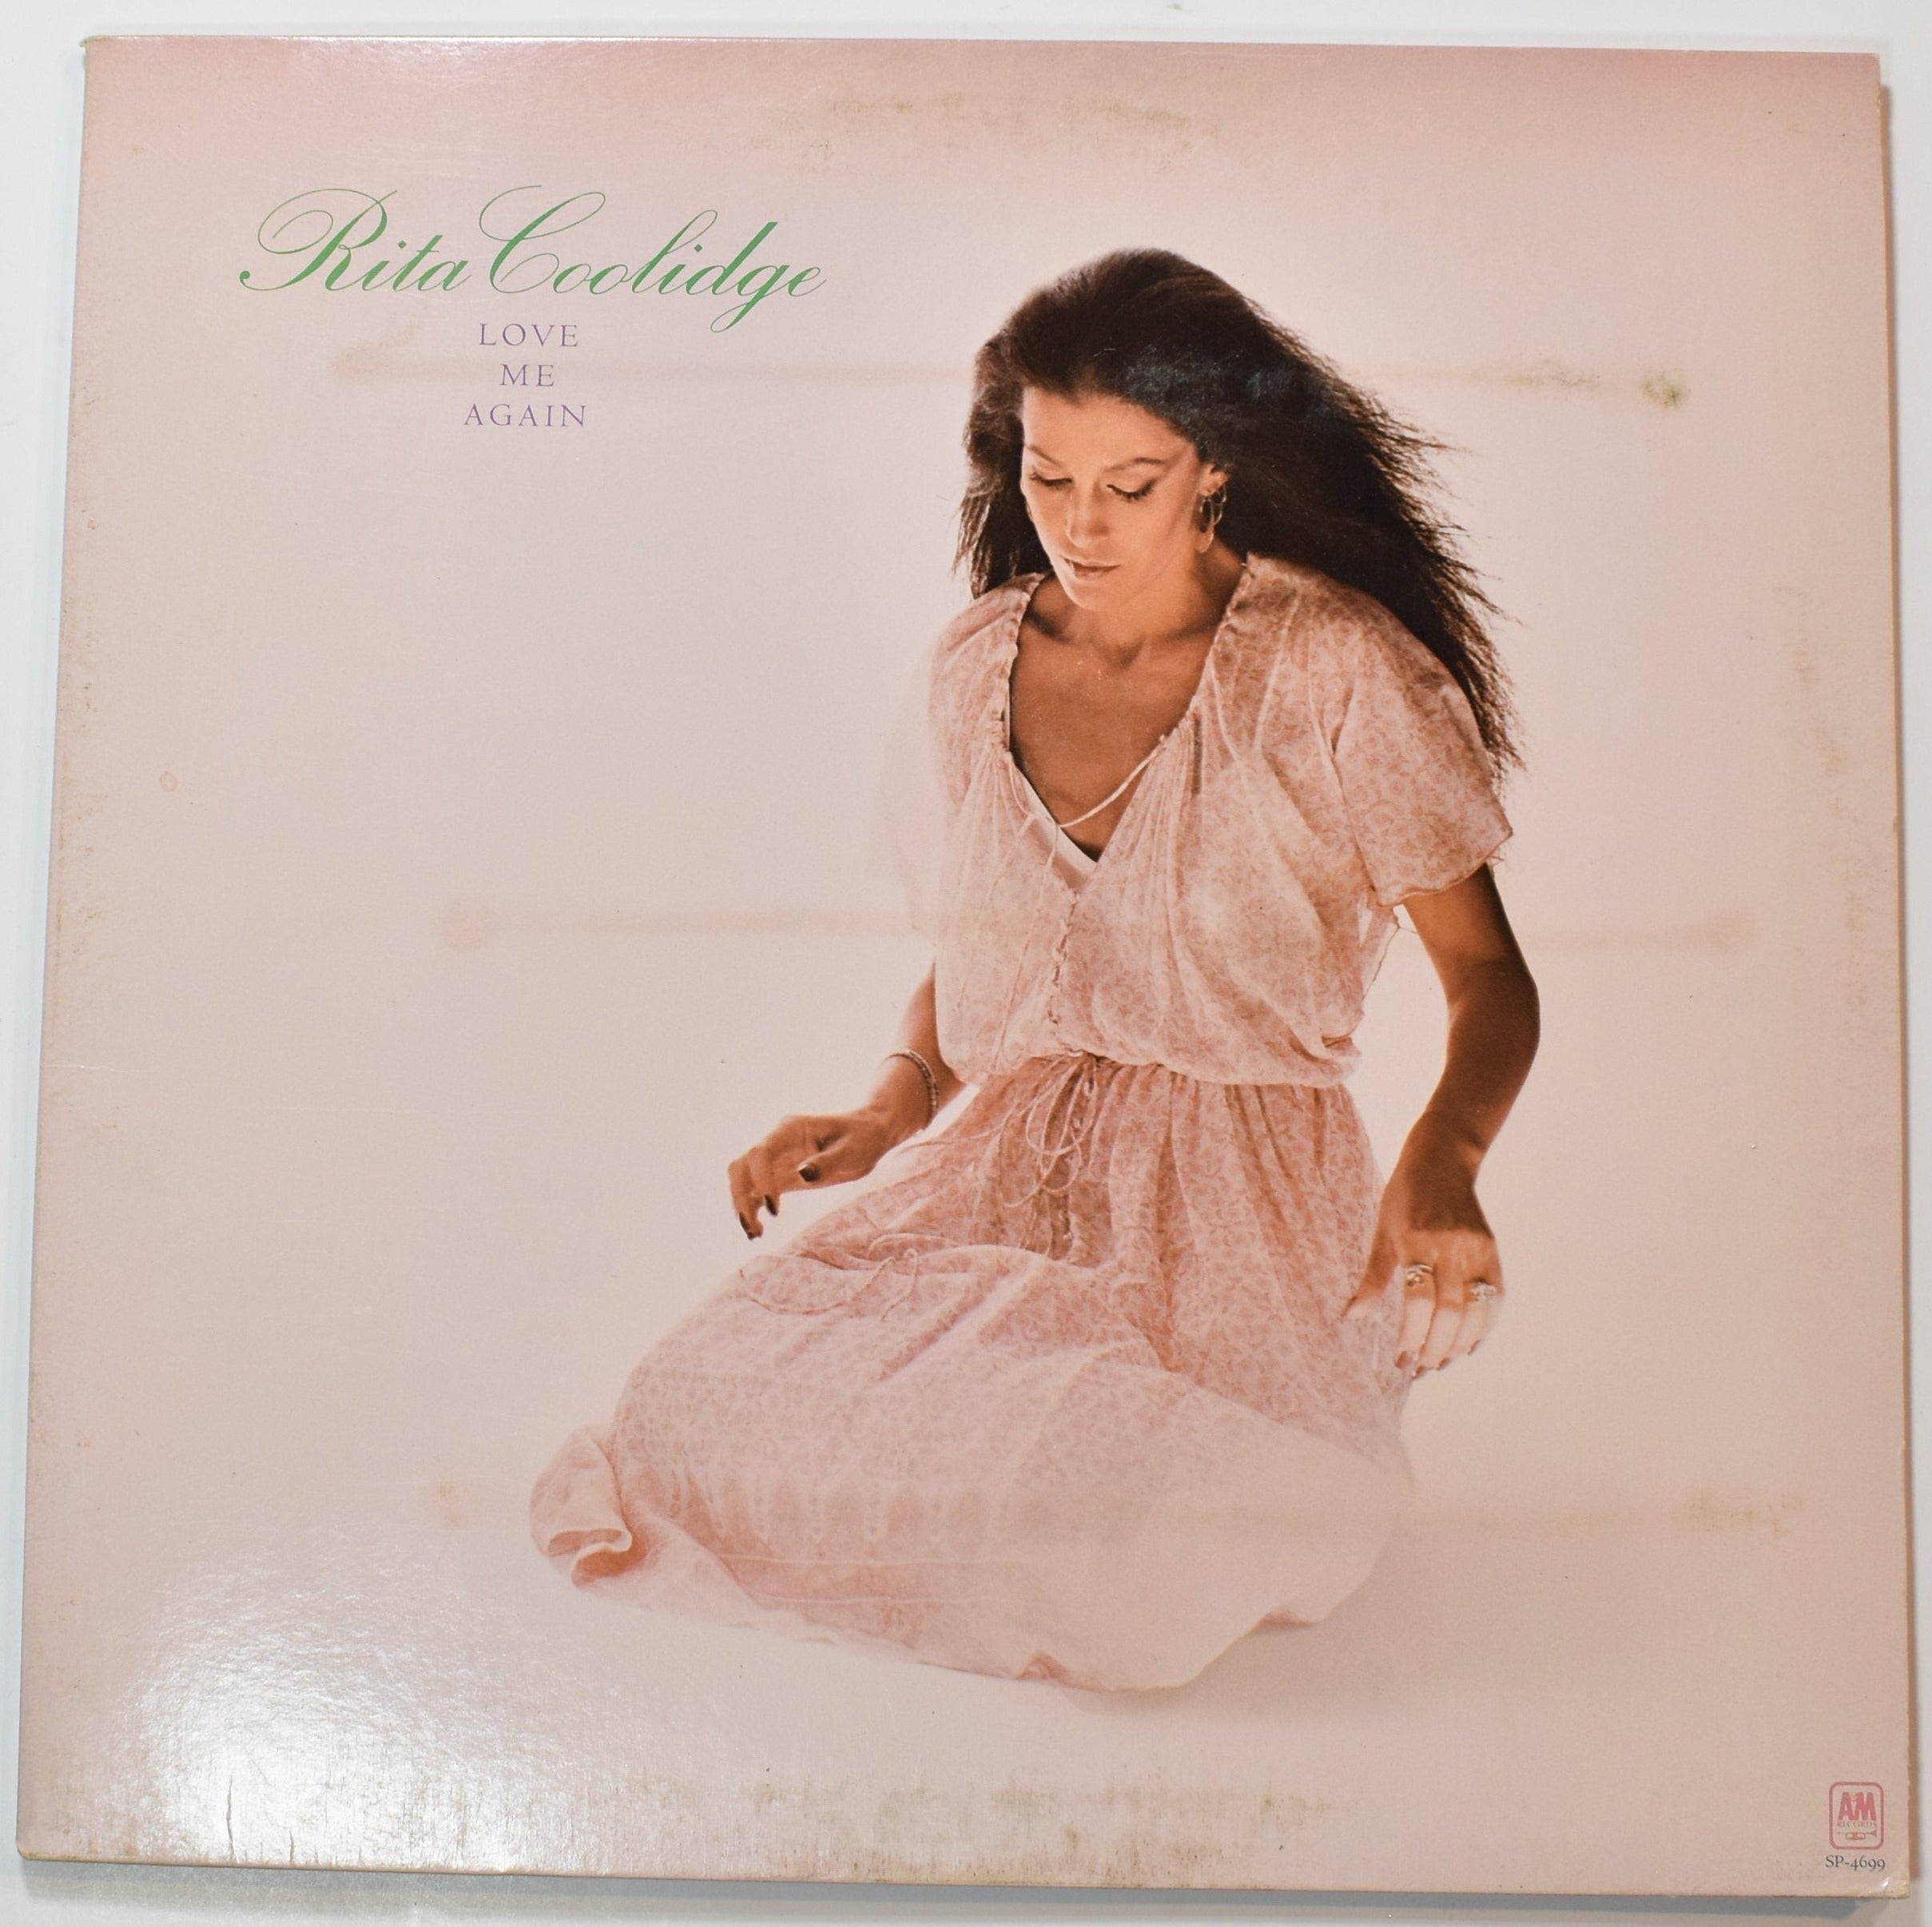 Vinyl Music Record Rita Coolidge Love me again used record